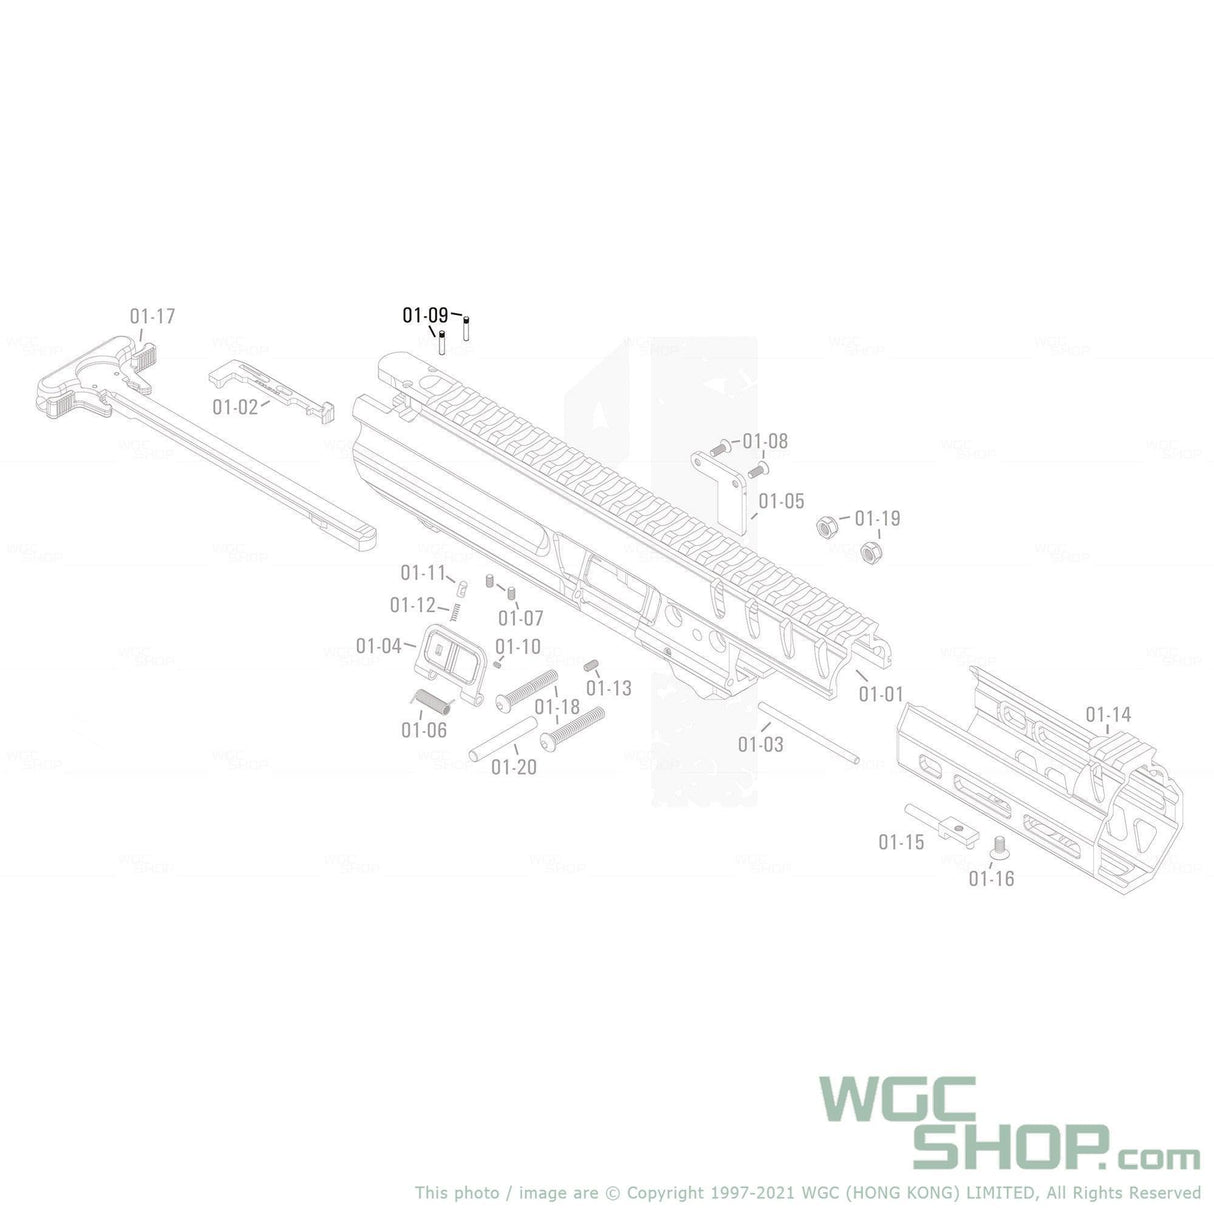 APFG Original Parts - MPX GBB Pin 2x11 ( 01-09 x 2 ) - WGC Shop